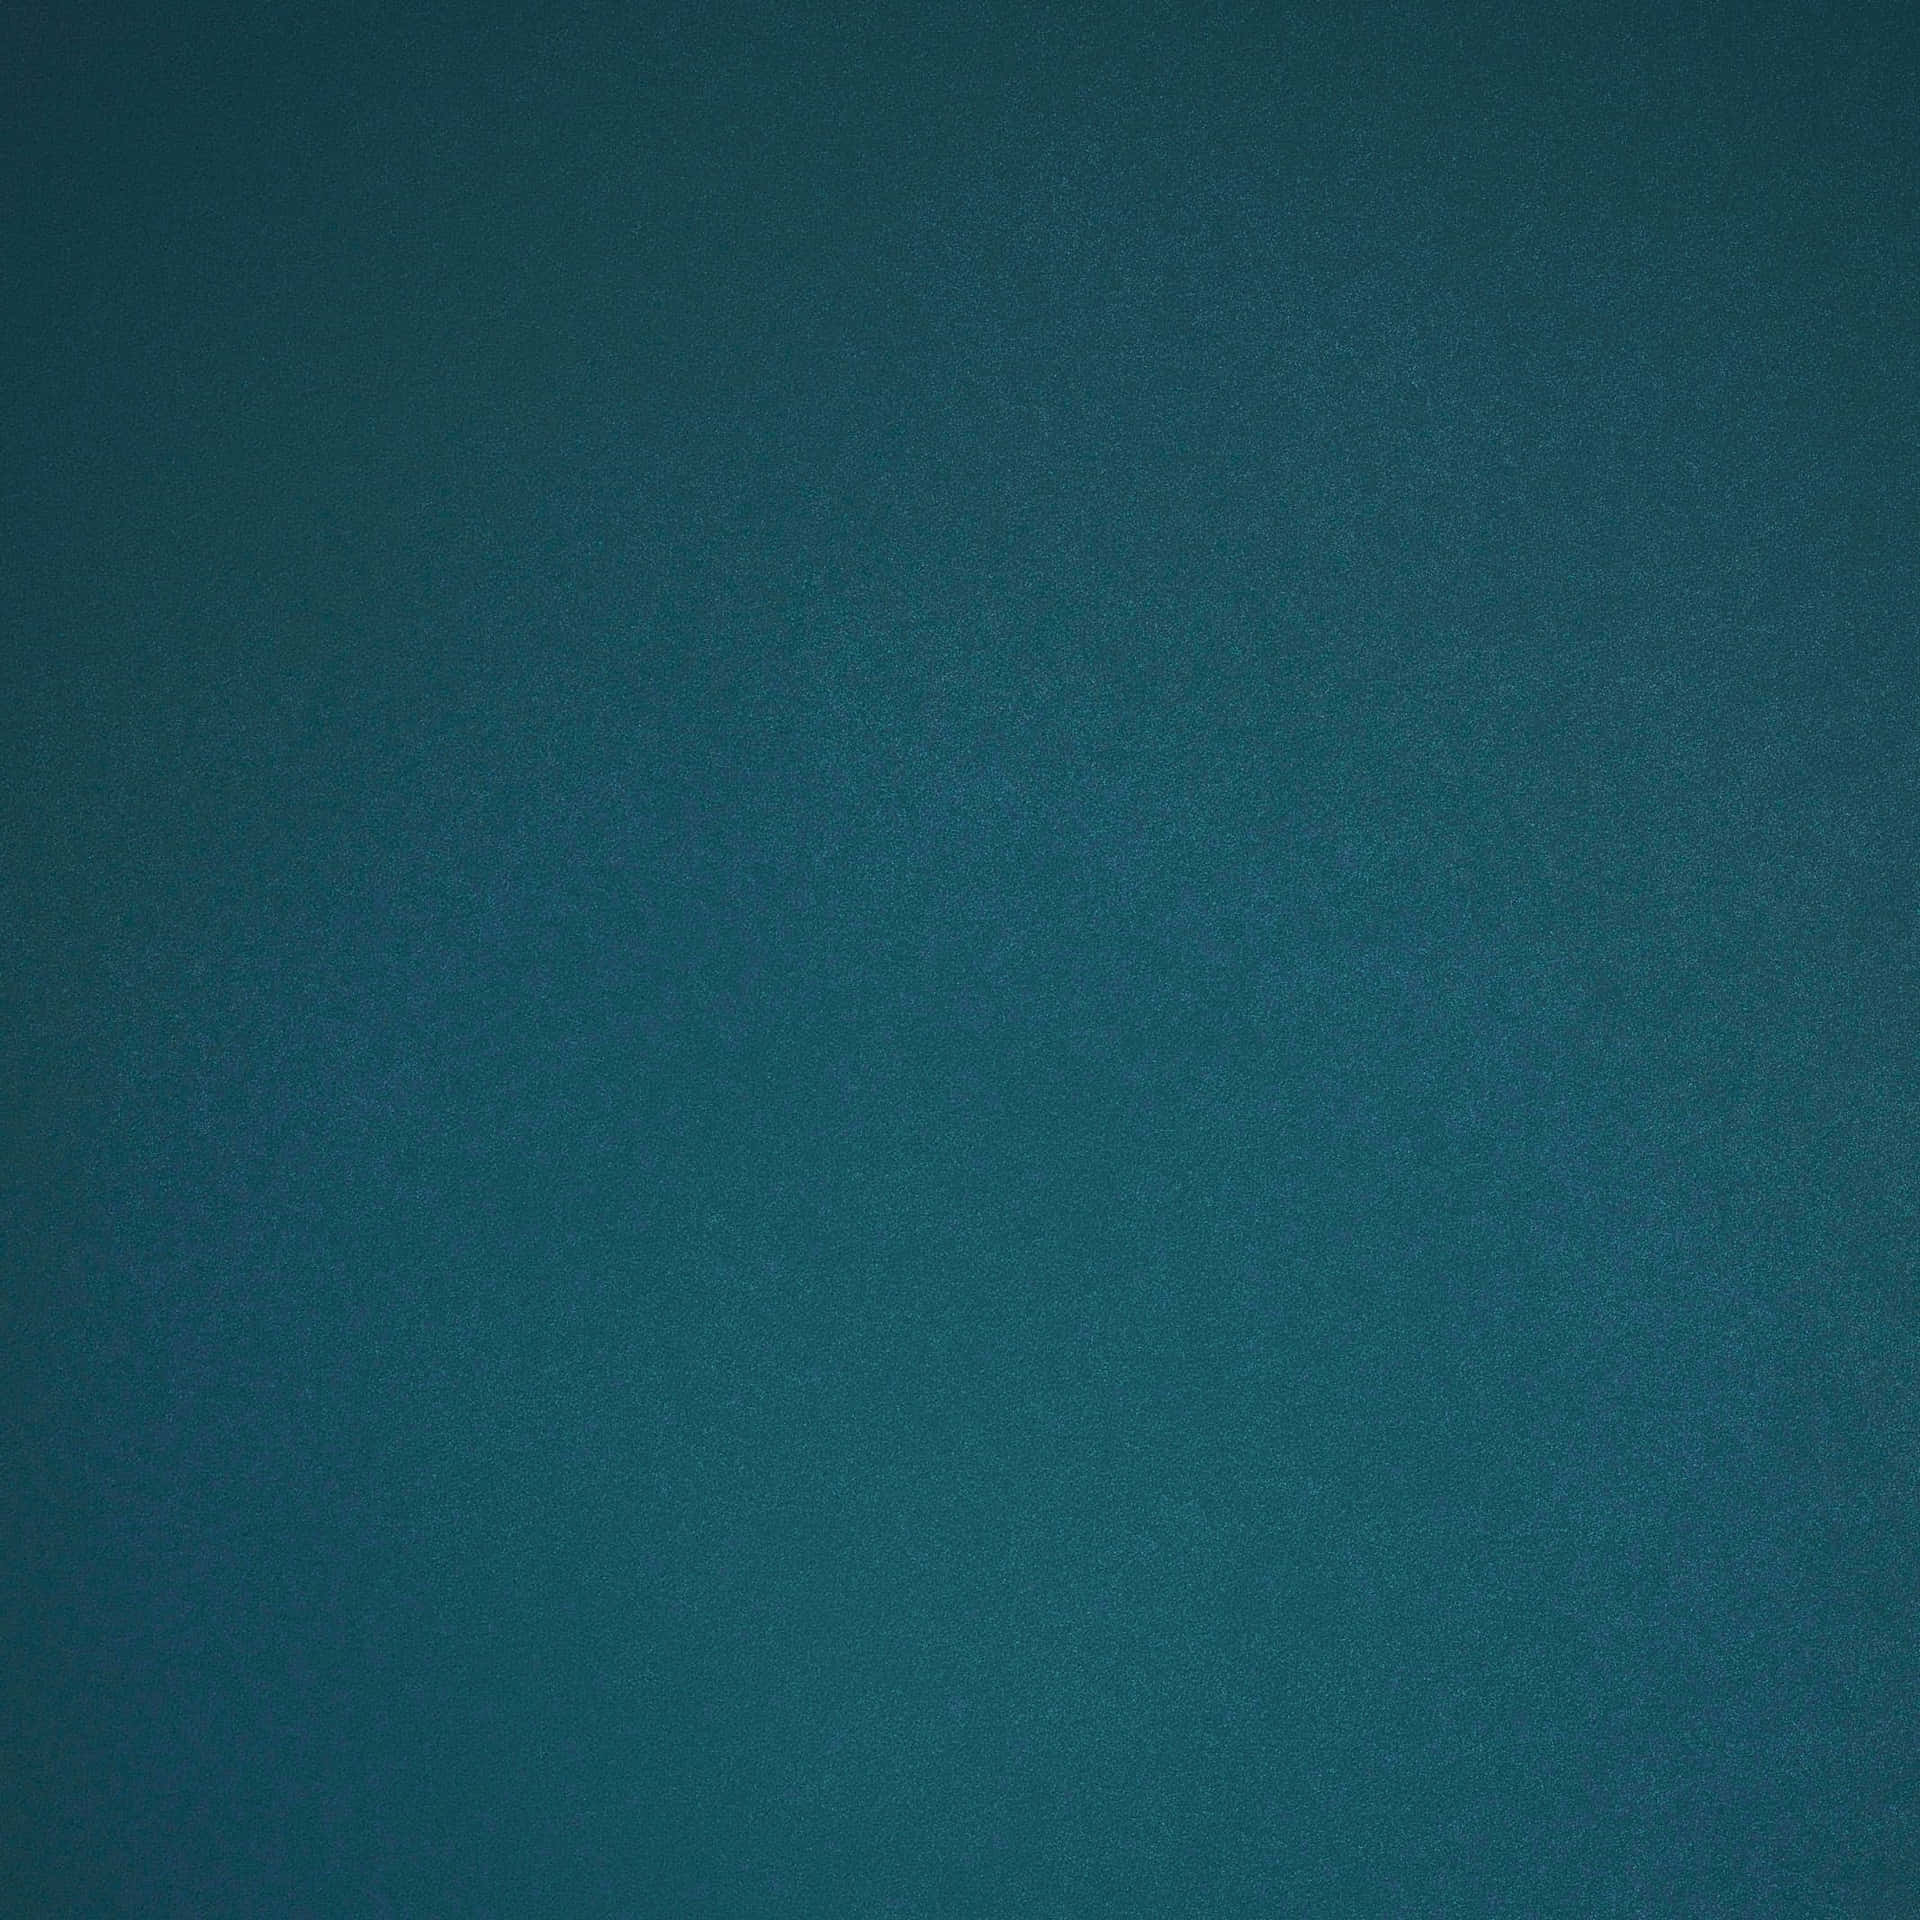 Dark Blue Gray Solid Color Background 8K Wallpaper – Molzahn, Reed